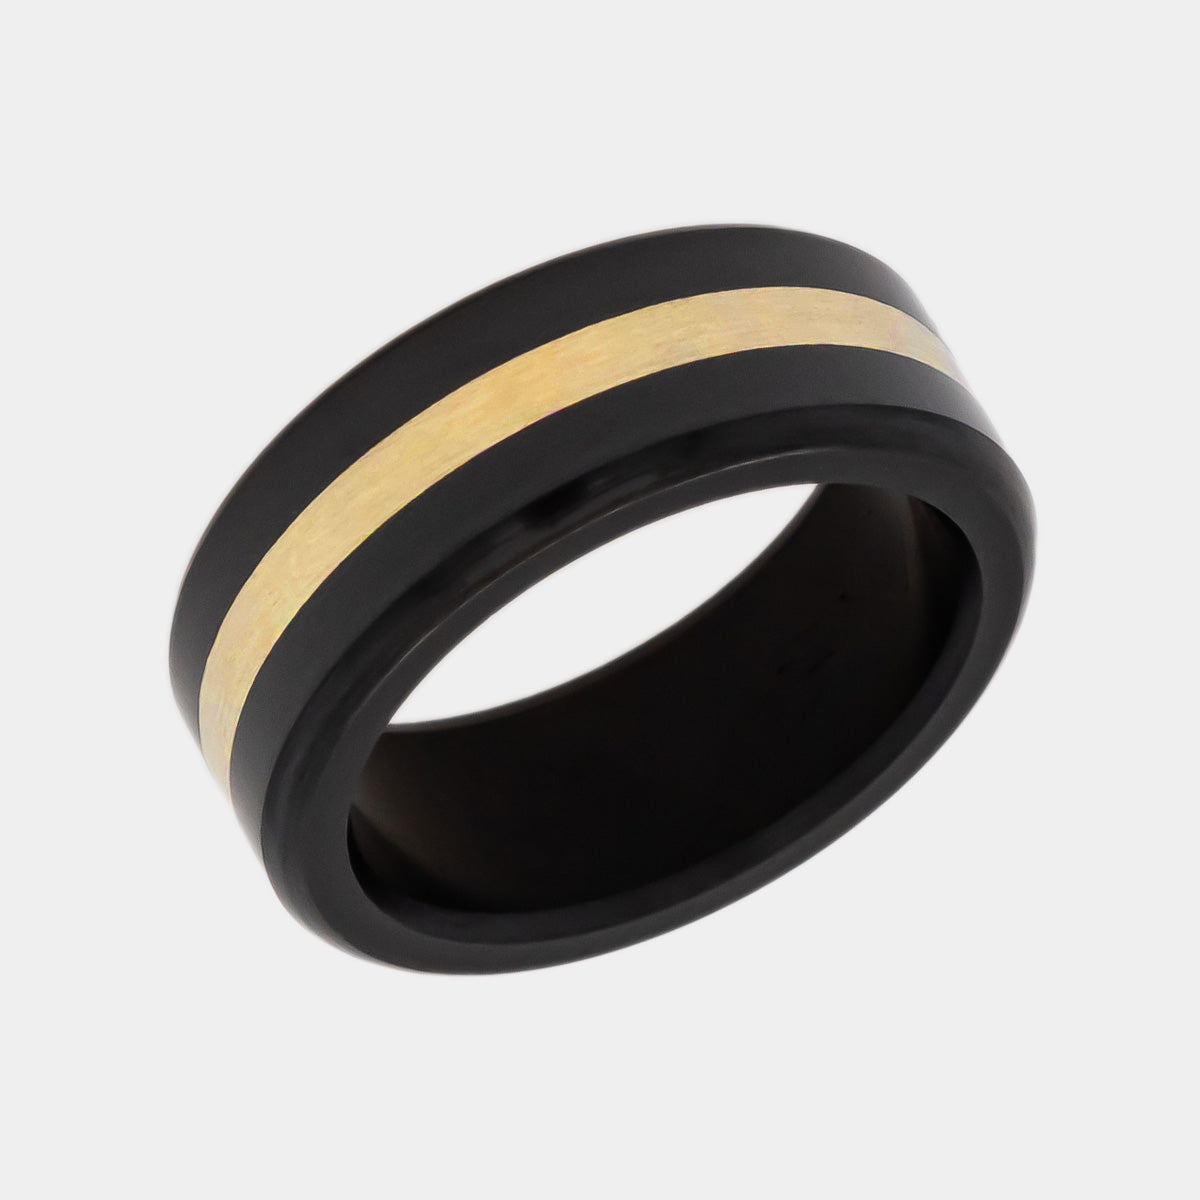 Black Diamond - Men’s Ring 8mm - 24k Yellow Gold Inlay - KRATOS - Elysium Black Diamond